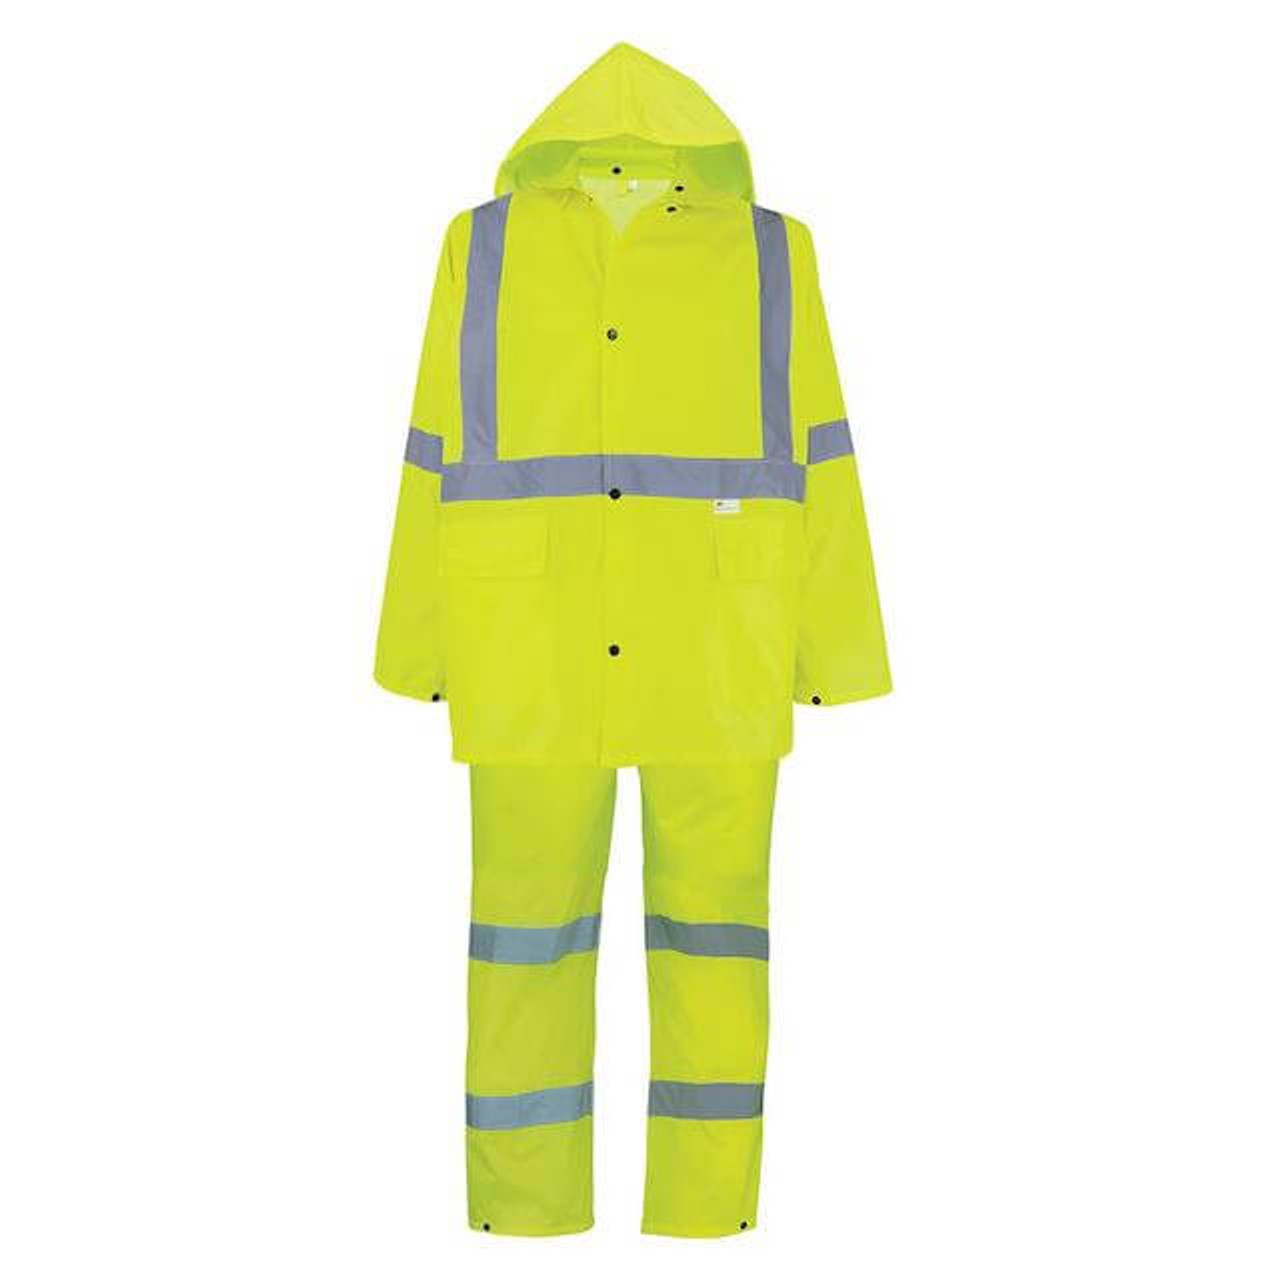 Rain Coat for Men Waterproof Raincoat with Pants Polyester Rain Coat For  Men Bike Rain Suit Rain Jacket Suit Mobile Pocket with Storage Bag - SIZE-  Medium (M) : Amazon.in: Fashion